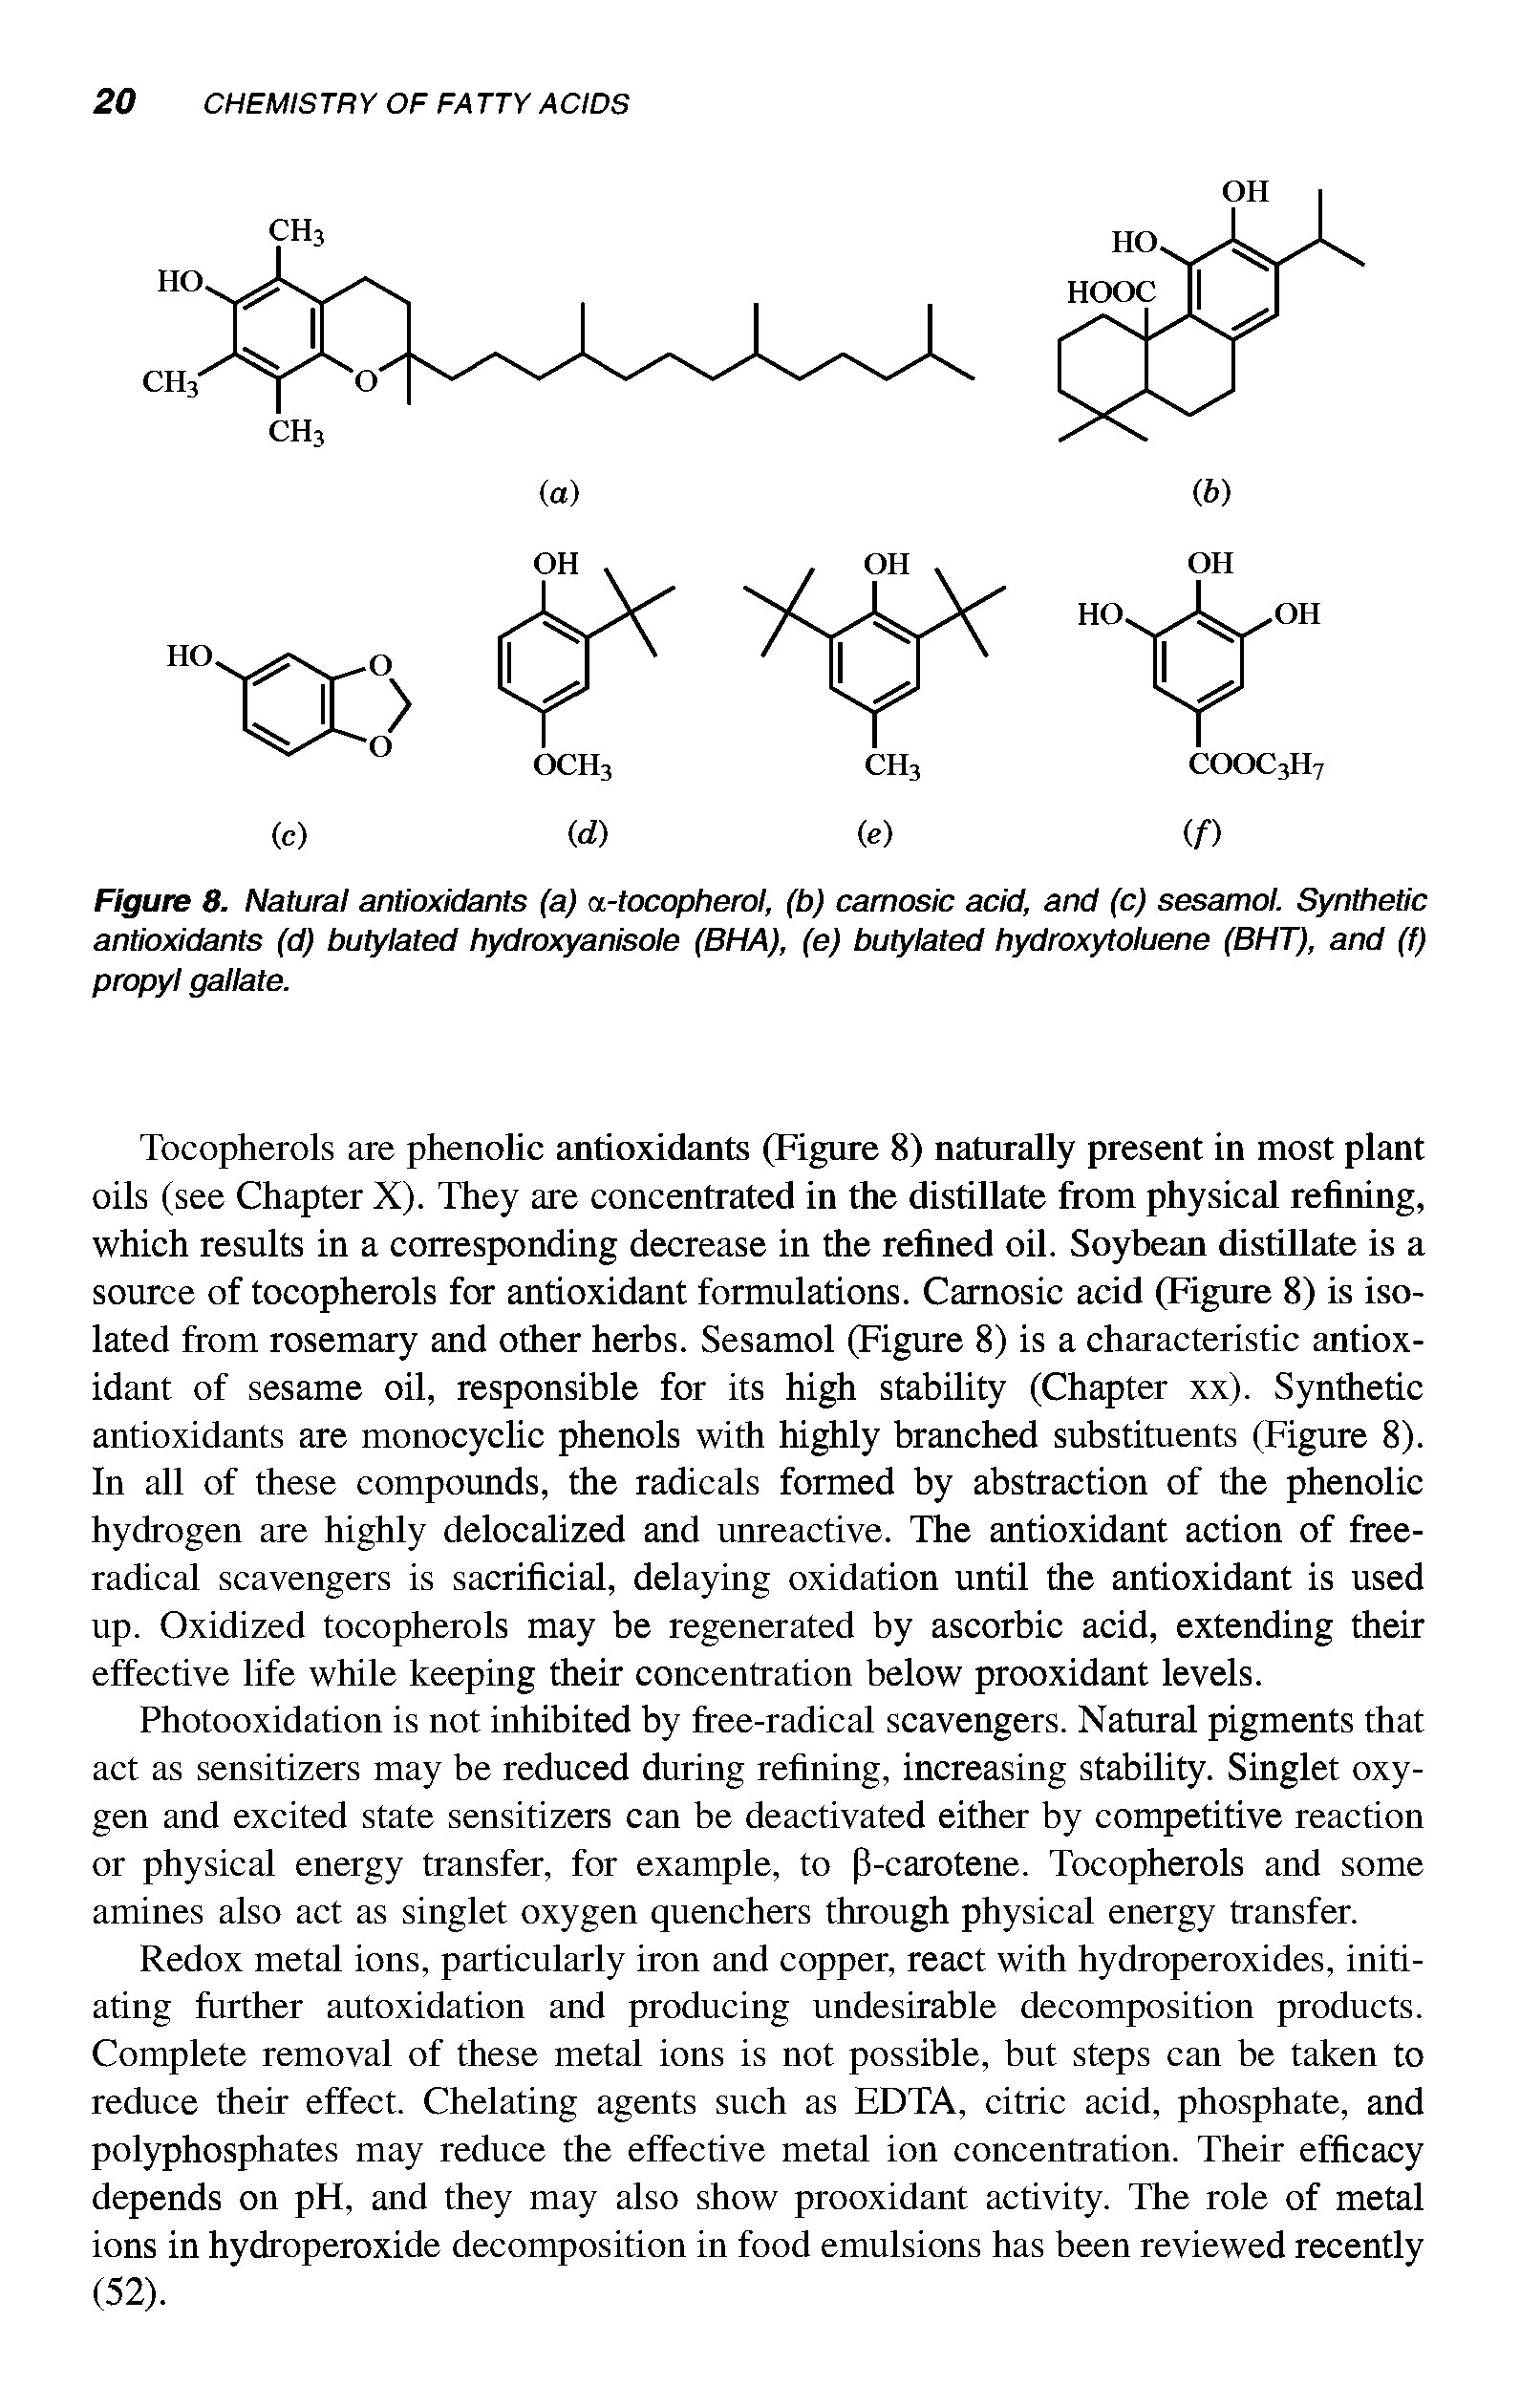 Figure 8. Natural antioxidants (a) a-tocopherol, (b) carnosic acid, and (c) sesamol. Synthetic antioxidants (d) butylated hydroxyanisole (BHA), (e) butylated hydroxytoluene (BHT), and (f) propyl gallate.